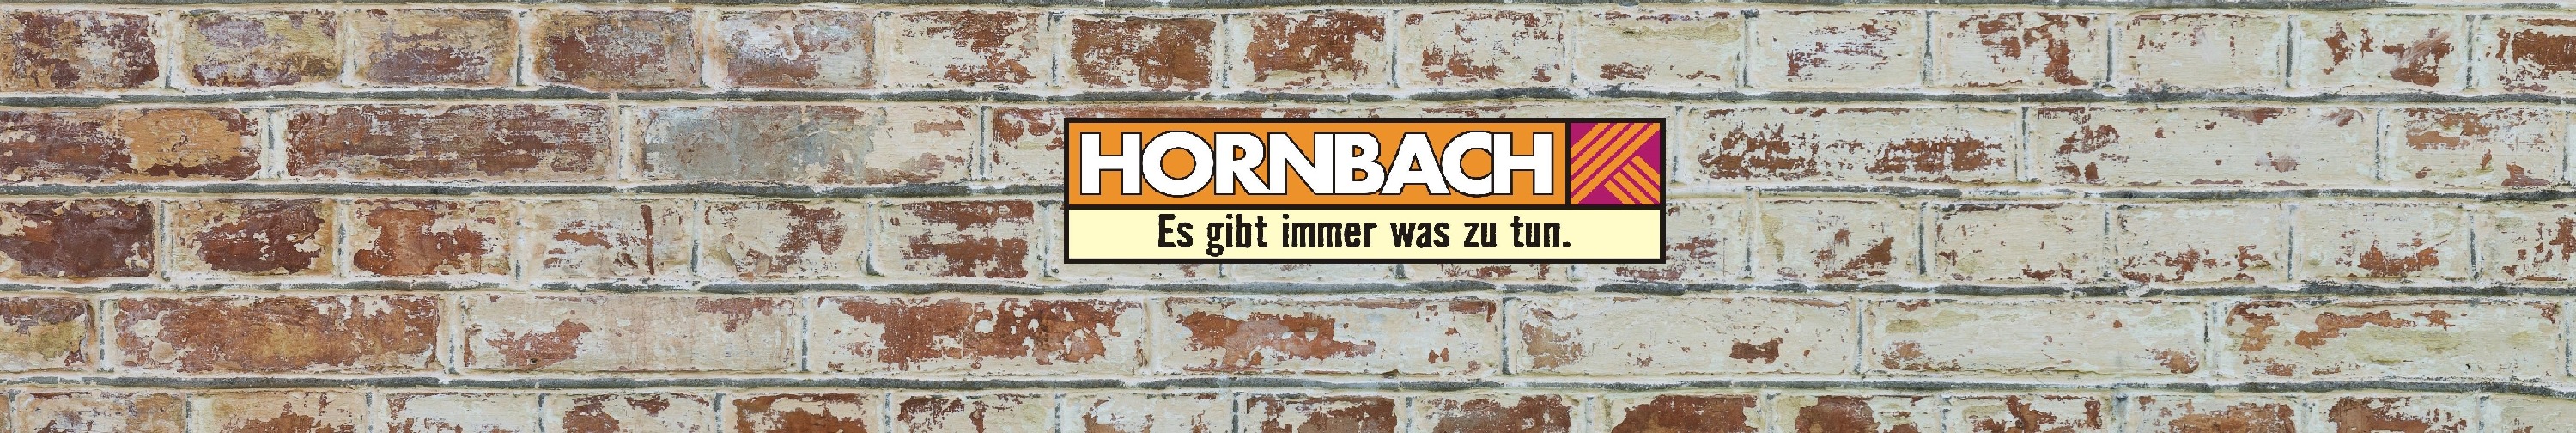 Hornbach background